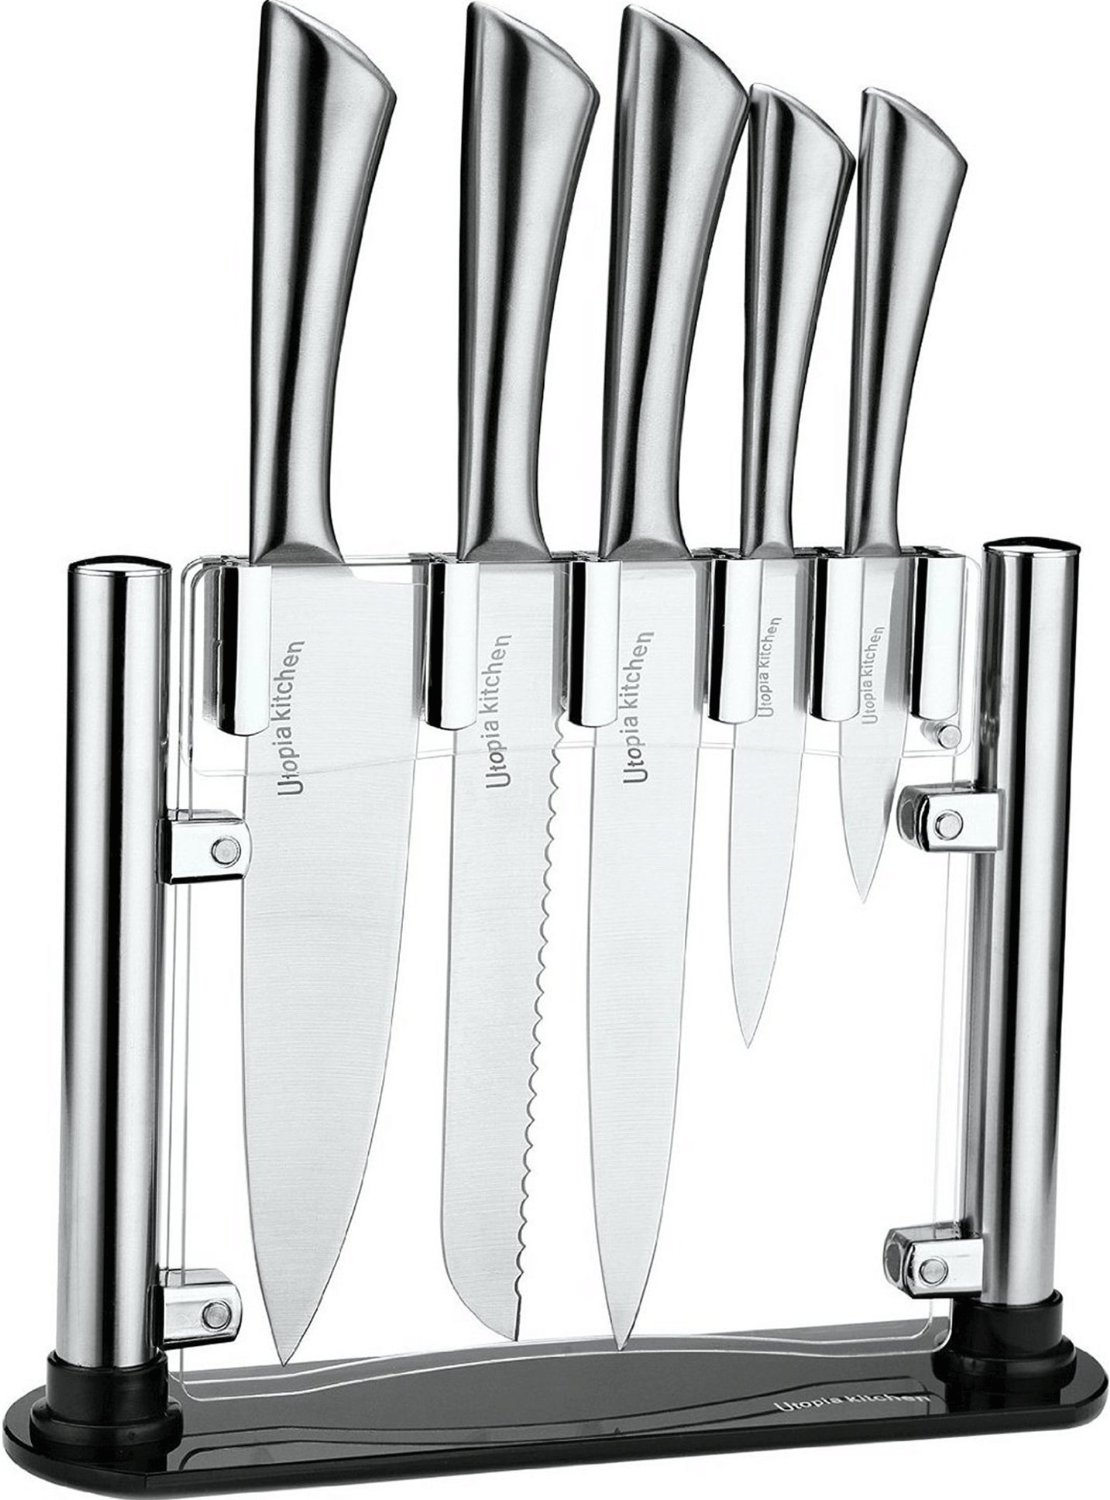 best rated kitchen knife set